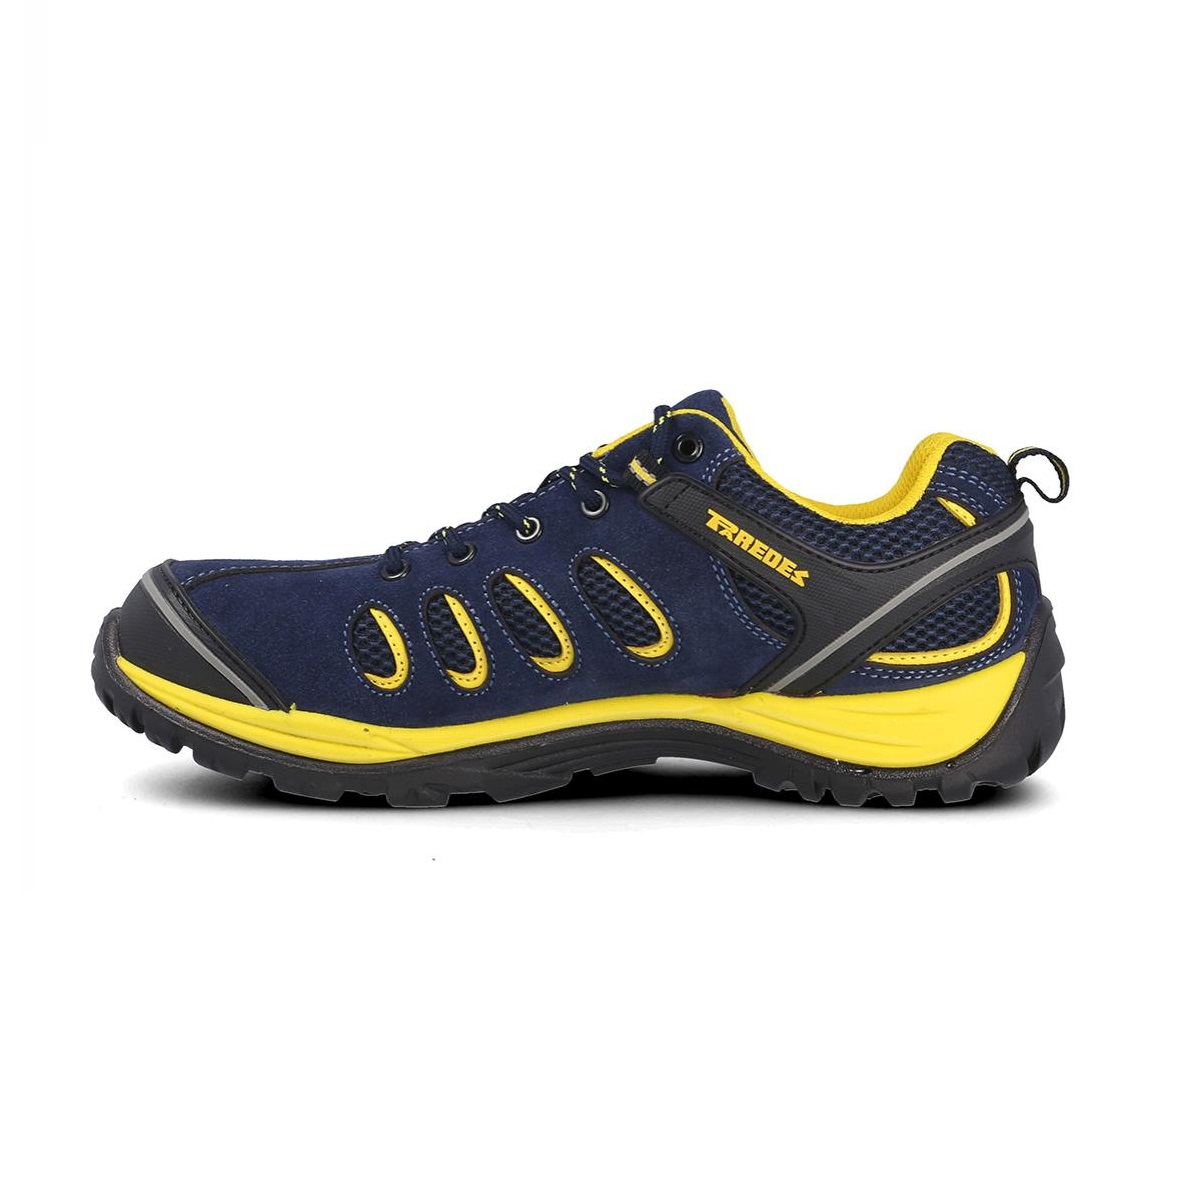 Zapato de S1 Paredes Radio azul marino y amarillo talla 42 - Corefluid